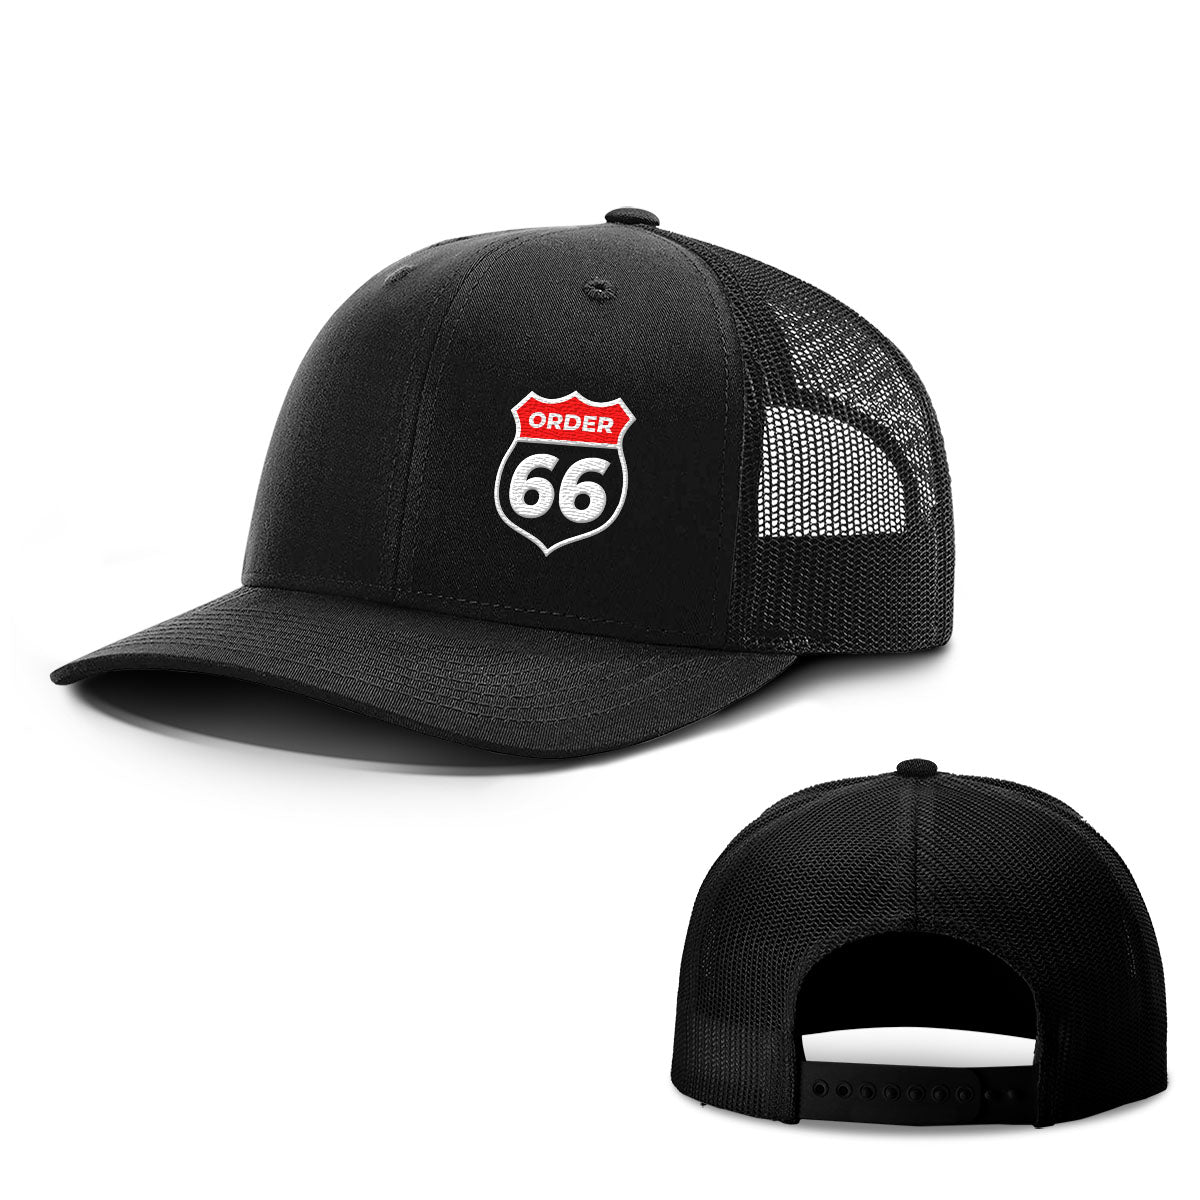 Order 66 Hats - BustedTees.com